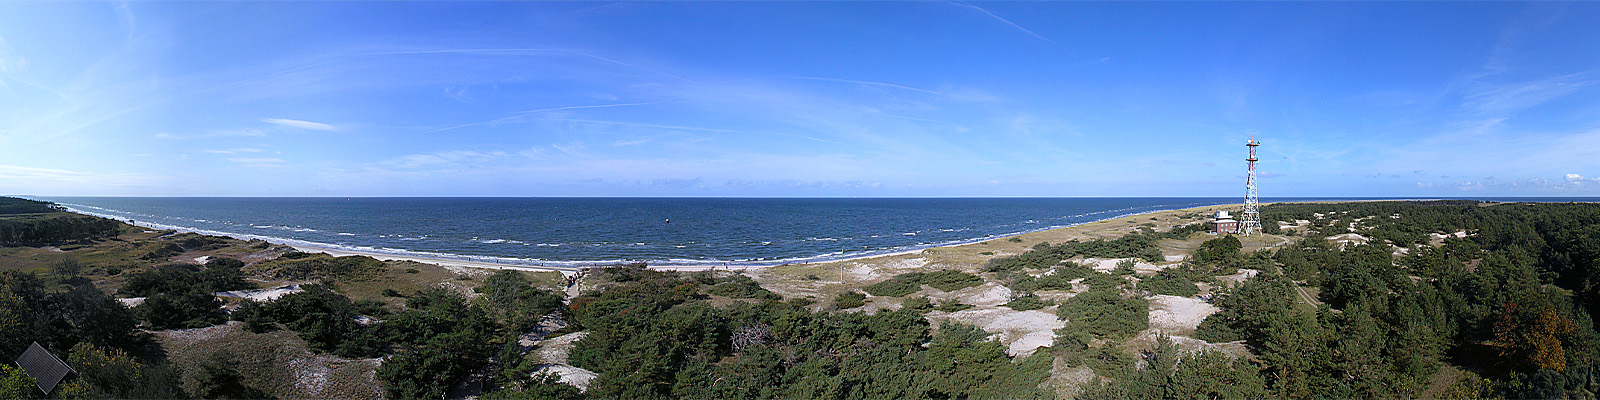 Panorama: Darßer Ort Blick vom Leuchtturm - Motivnummer: fdz-ort-02